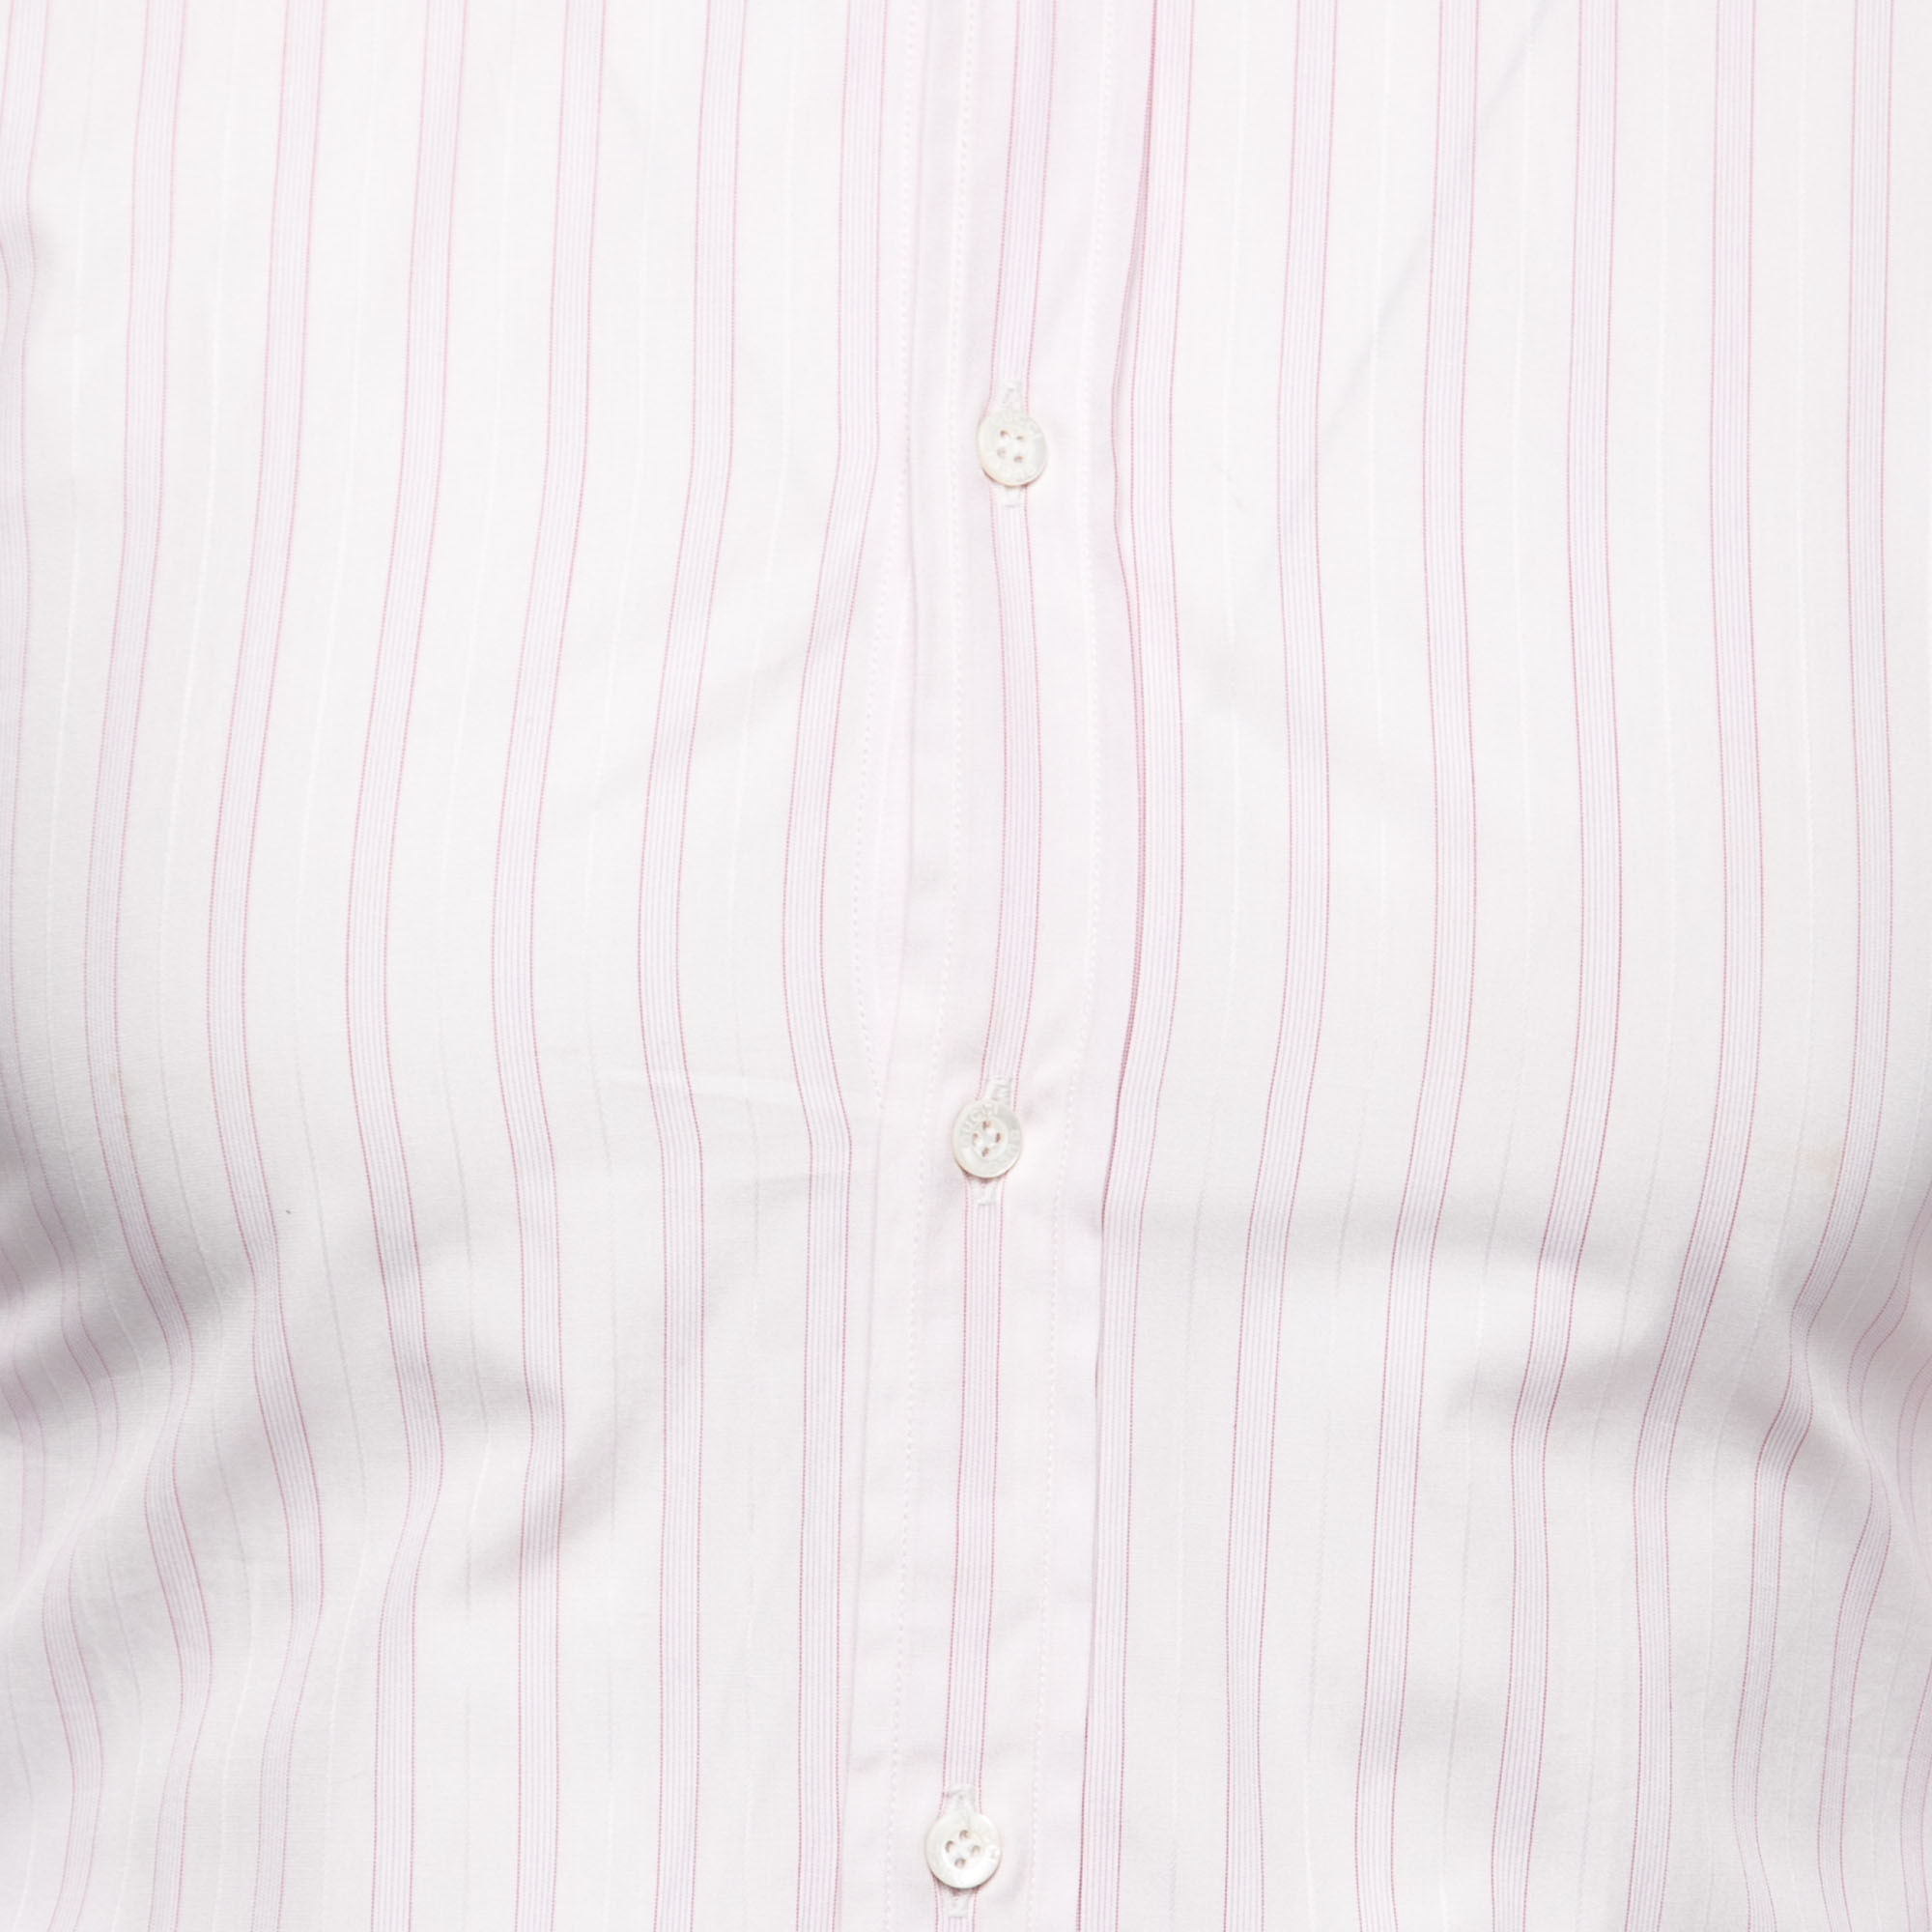 Gucci Pale Pink Striped Cotton Classic Shirt S